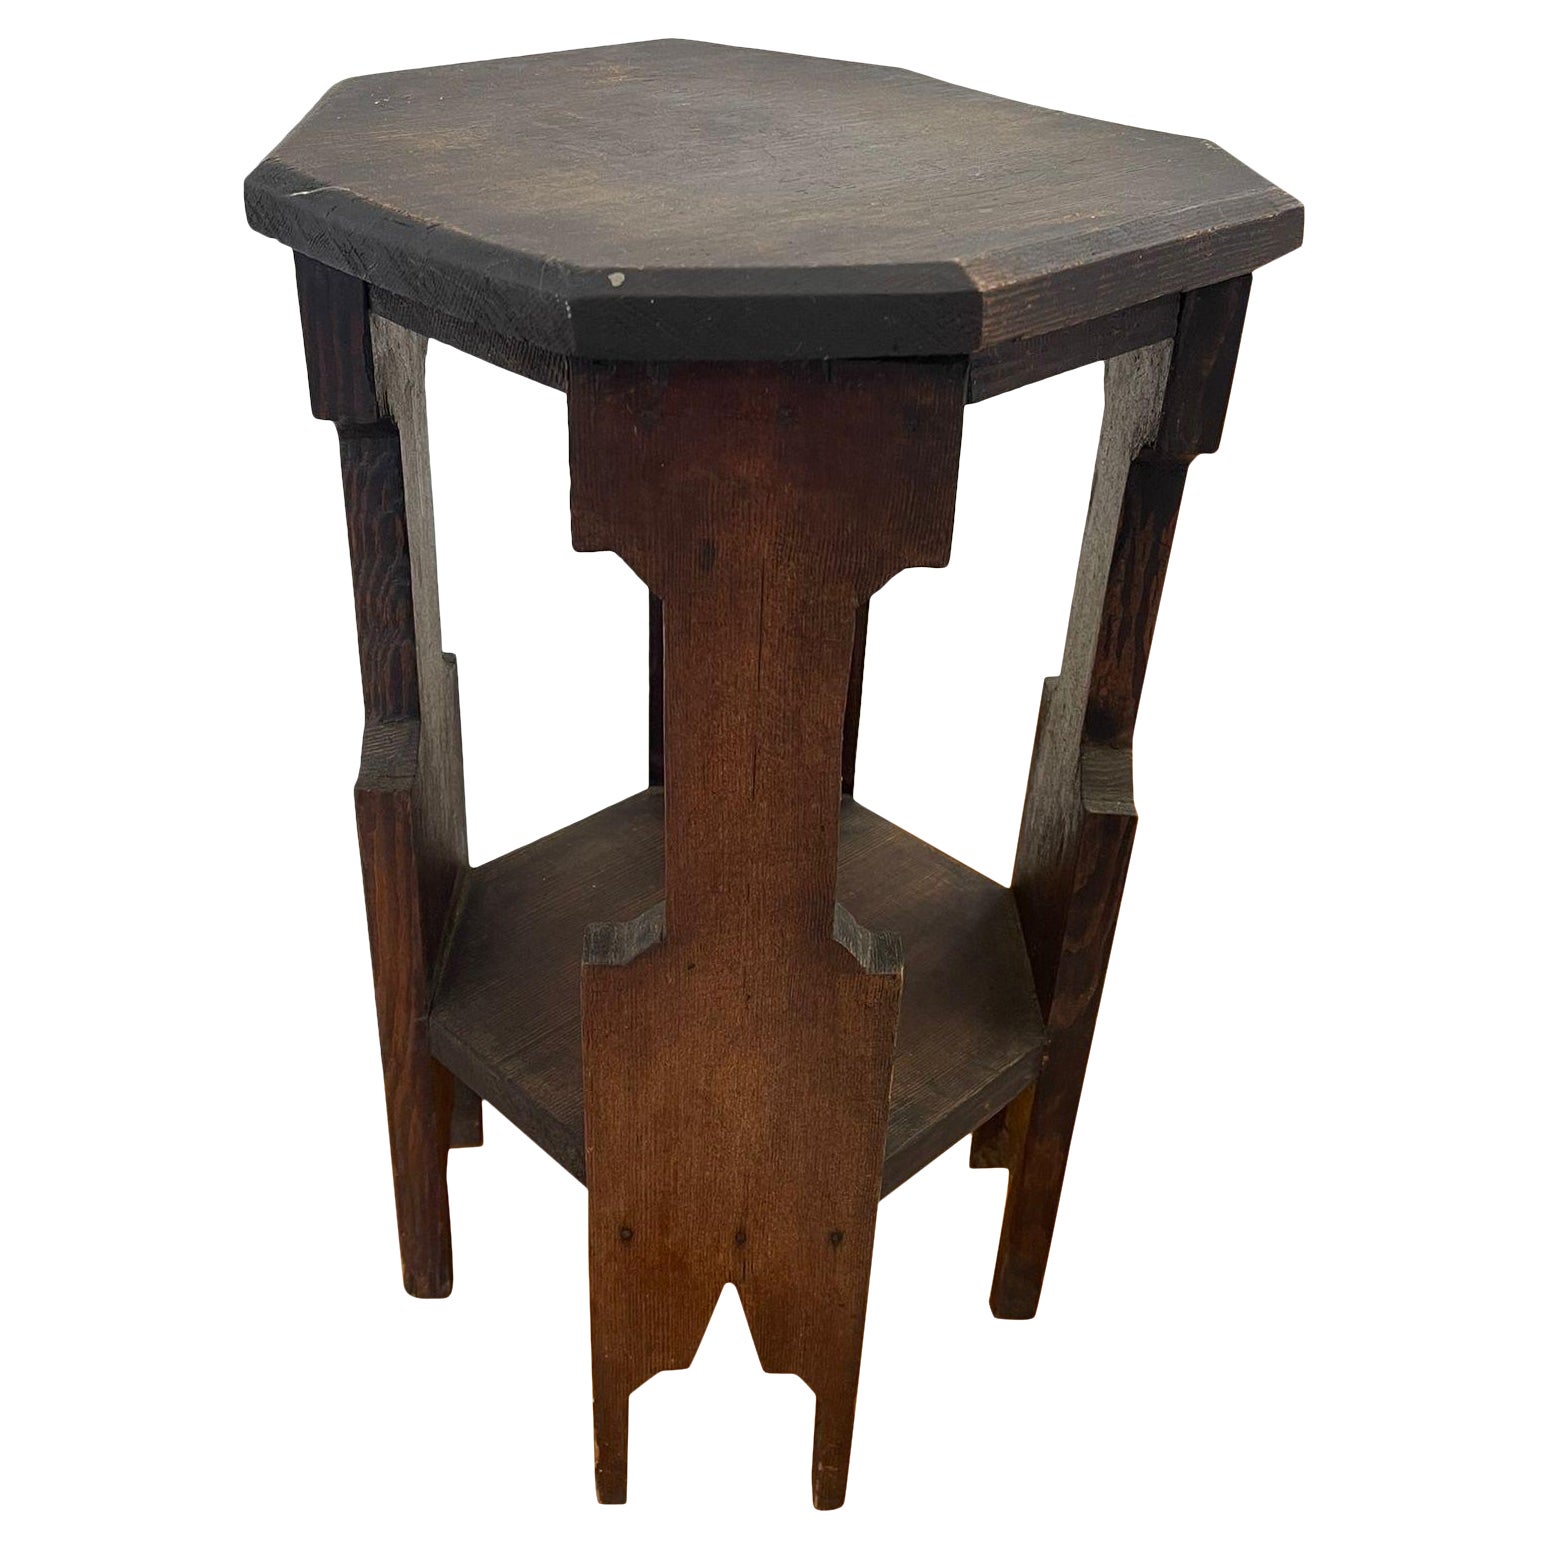 Vintage Wooden Primitively Designed Decorative Side Table With Octagonal Shape 